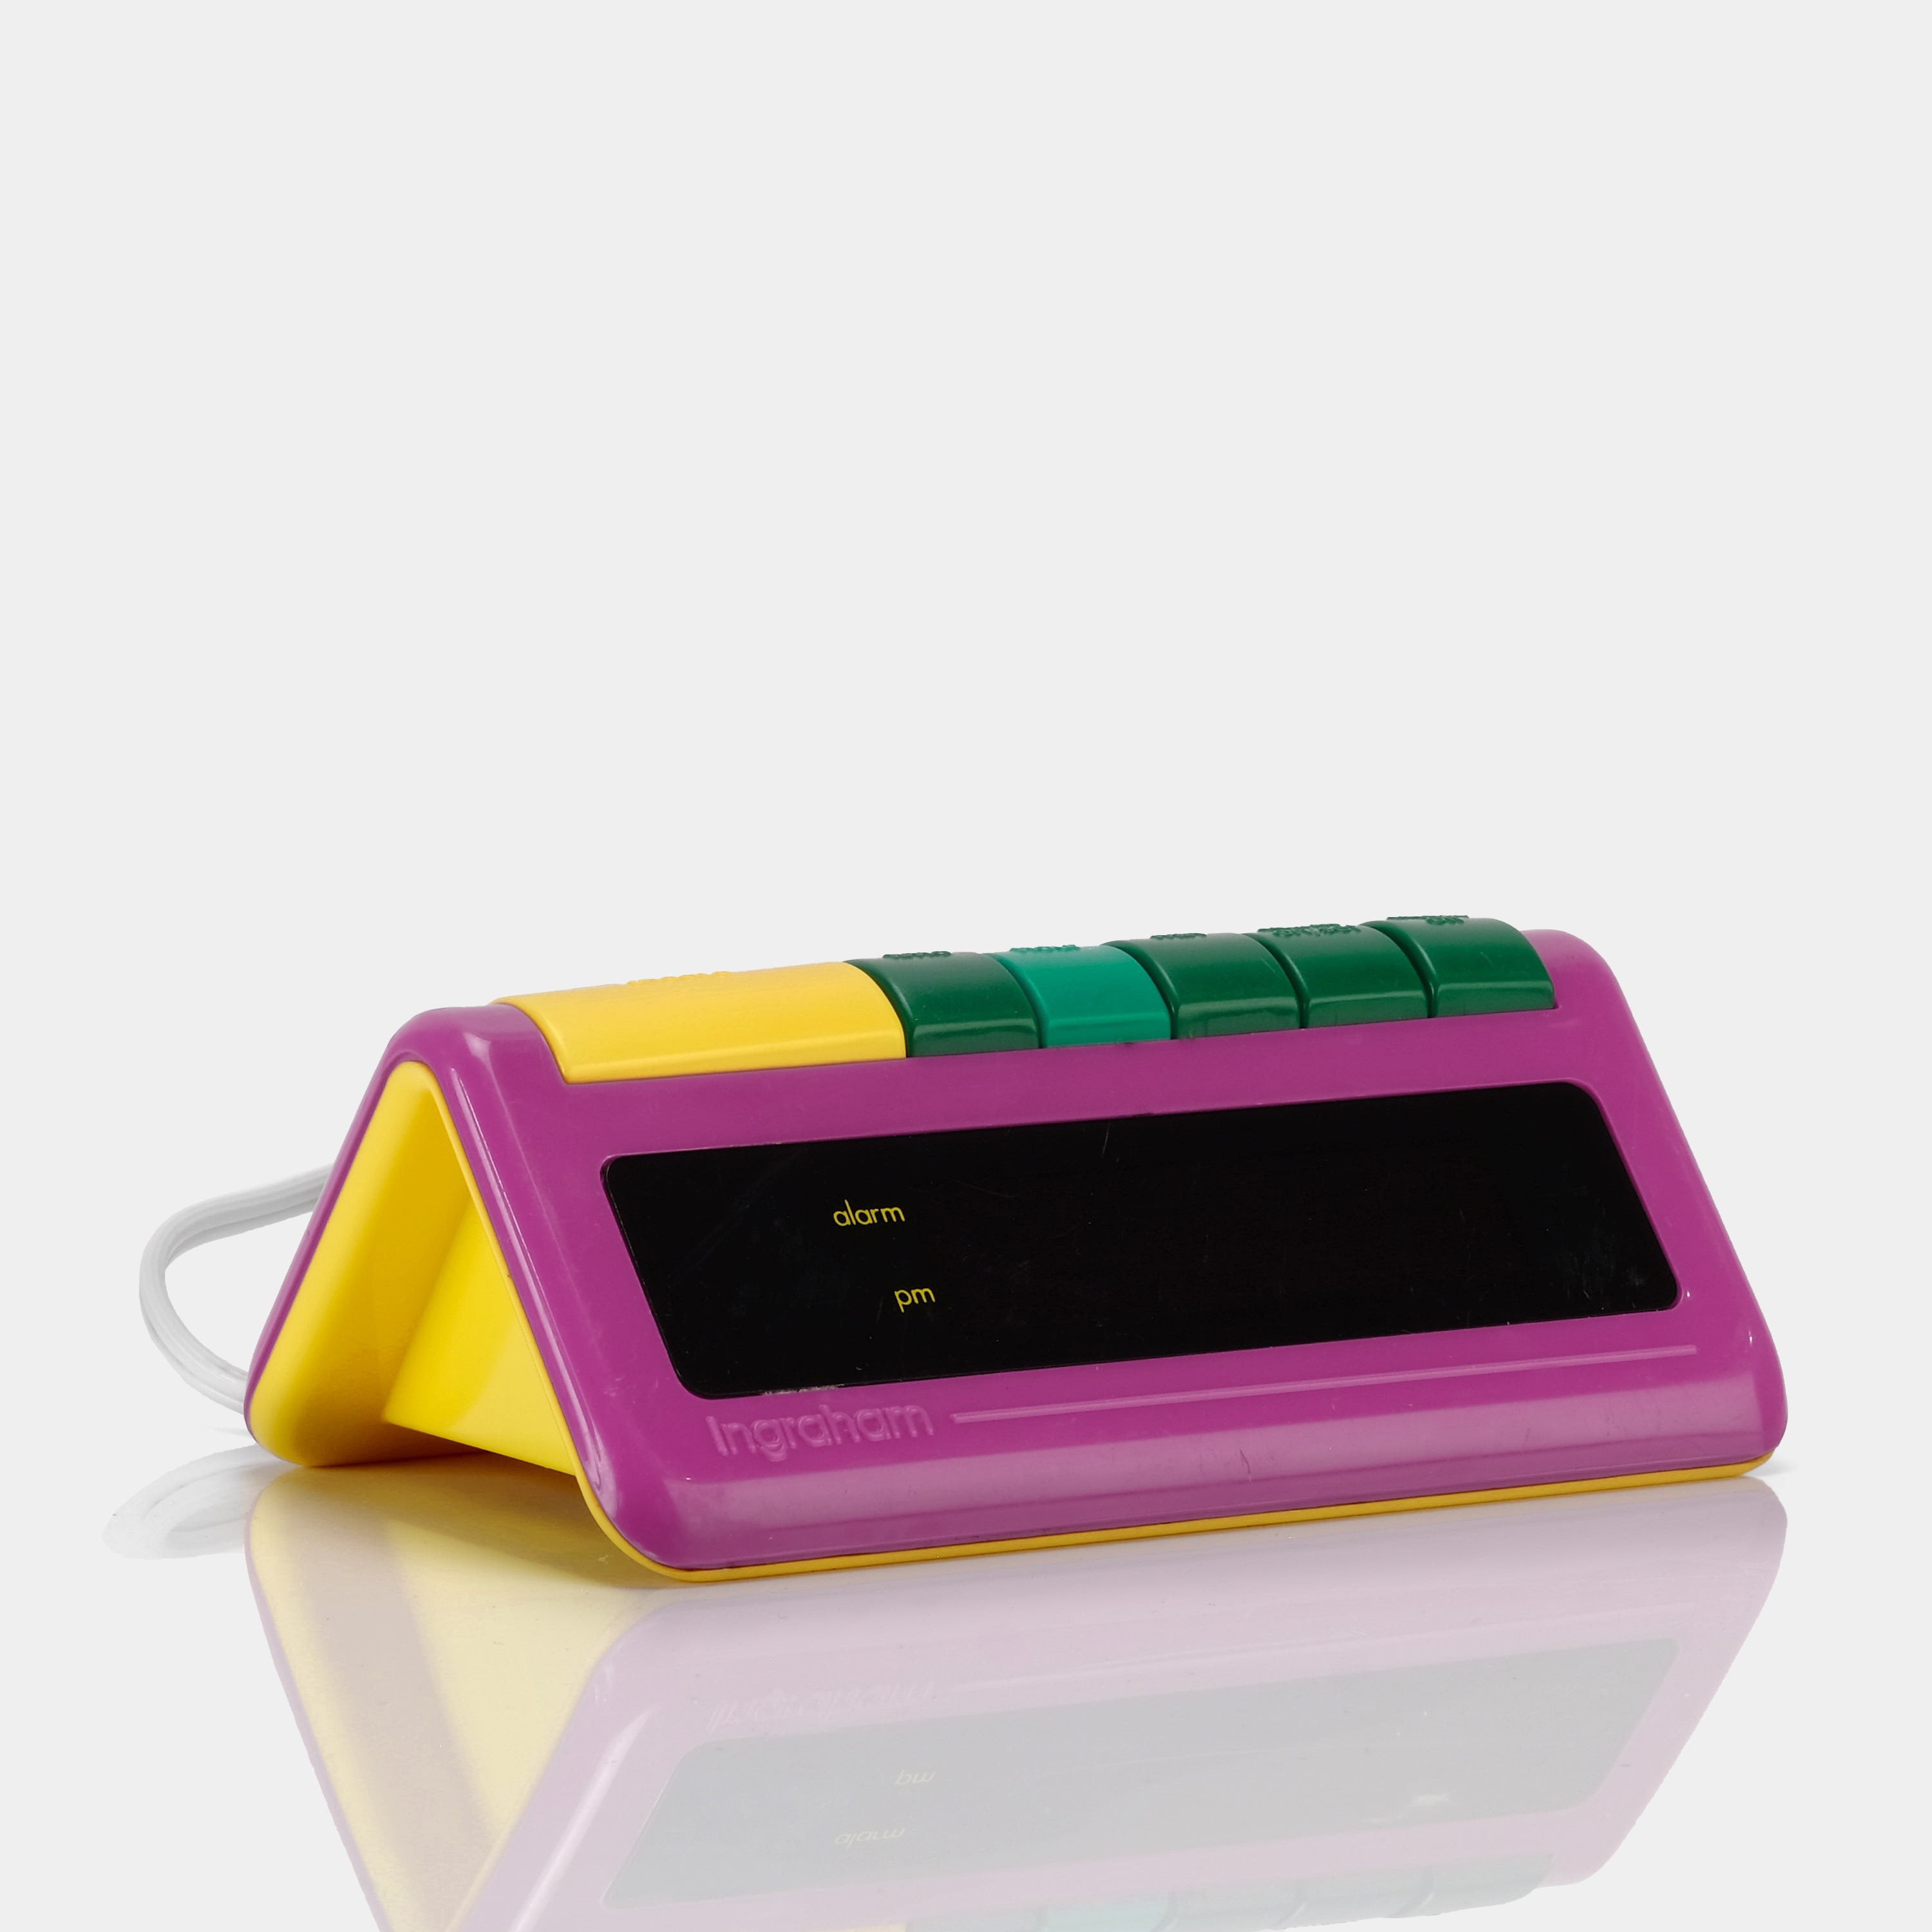 Ingraham Post-Modern Triangular Digital Alarm Clock